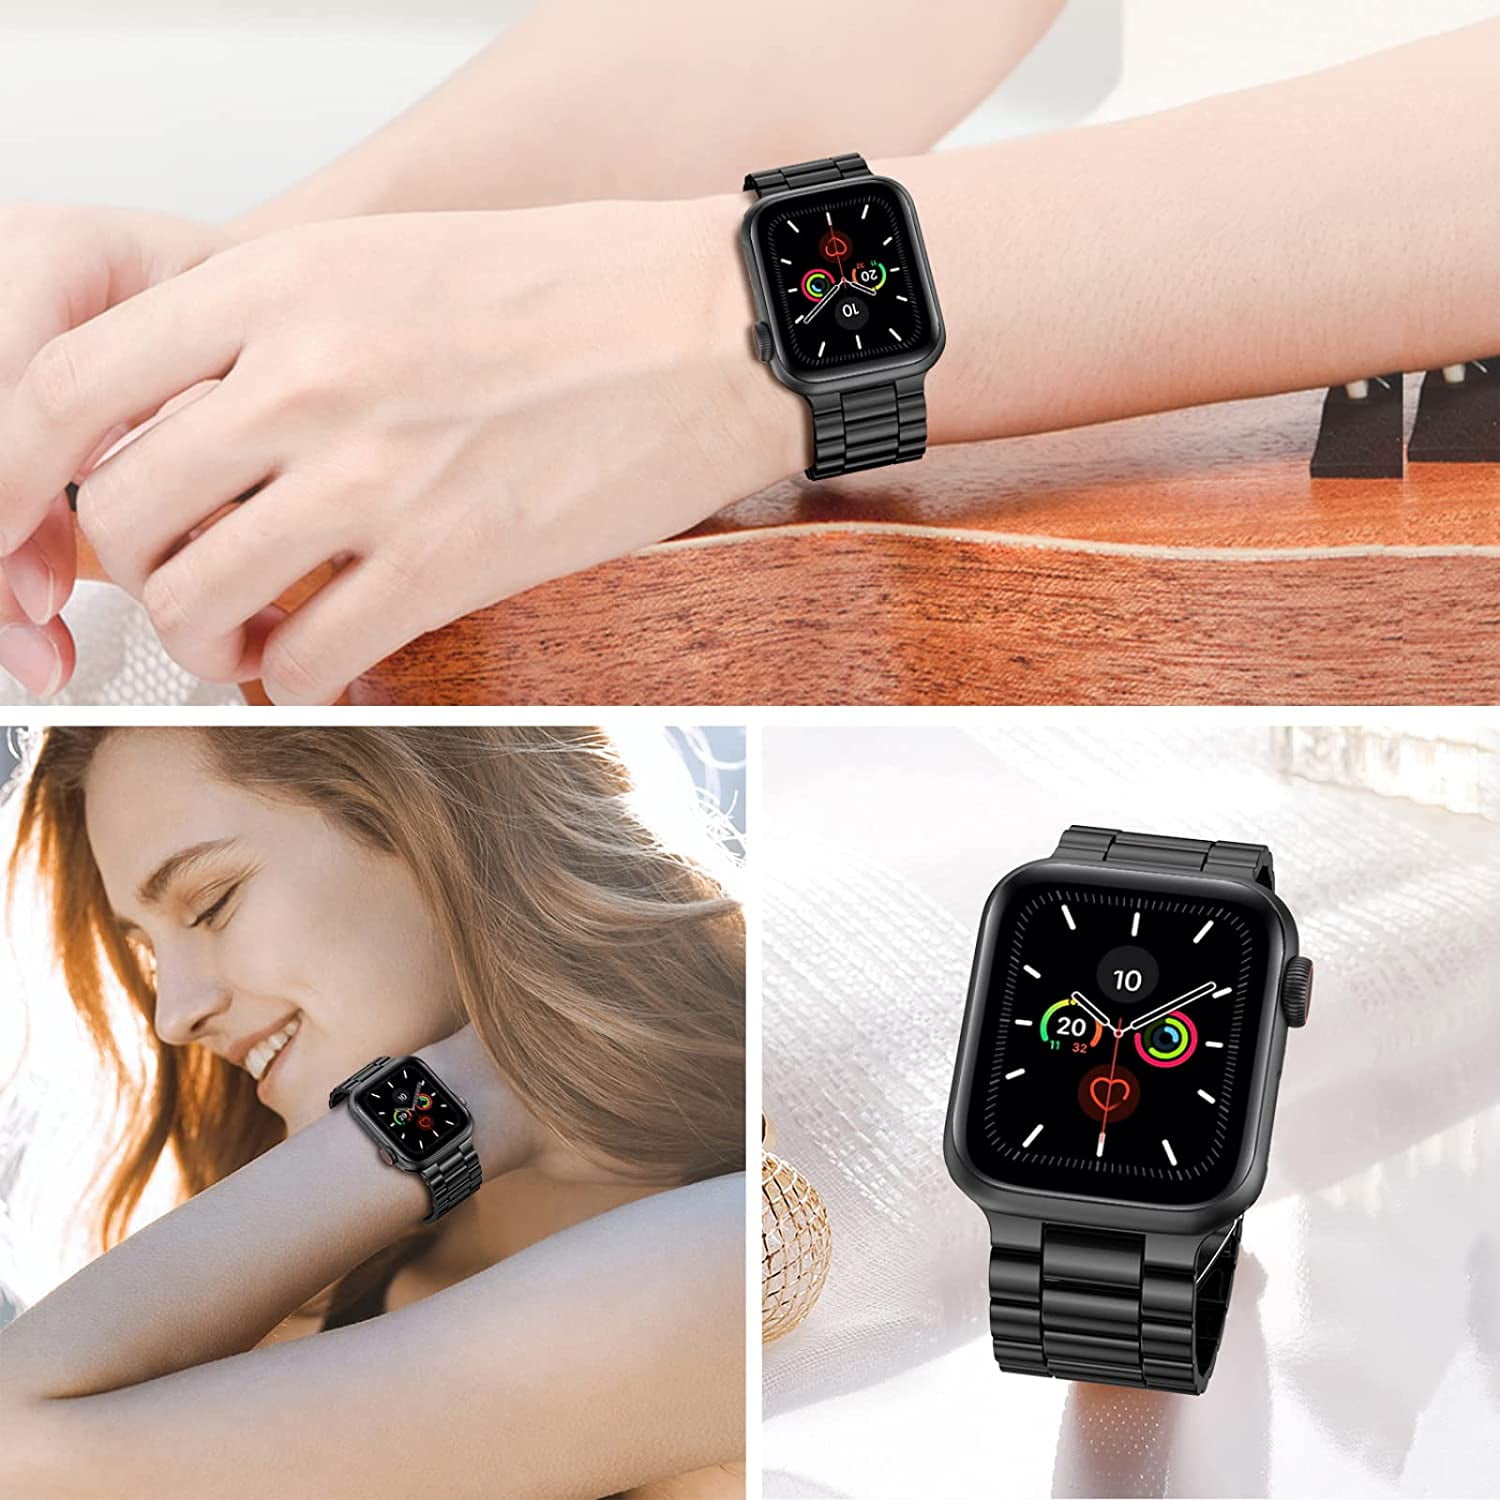 An elegant stainless steel bracelet for the Apple Watch